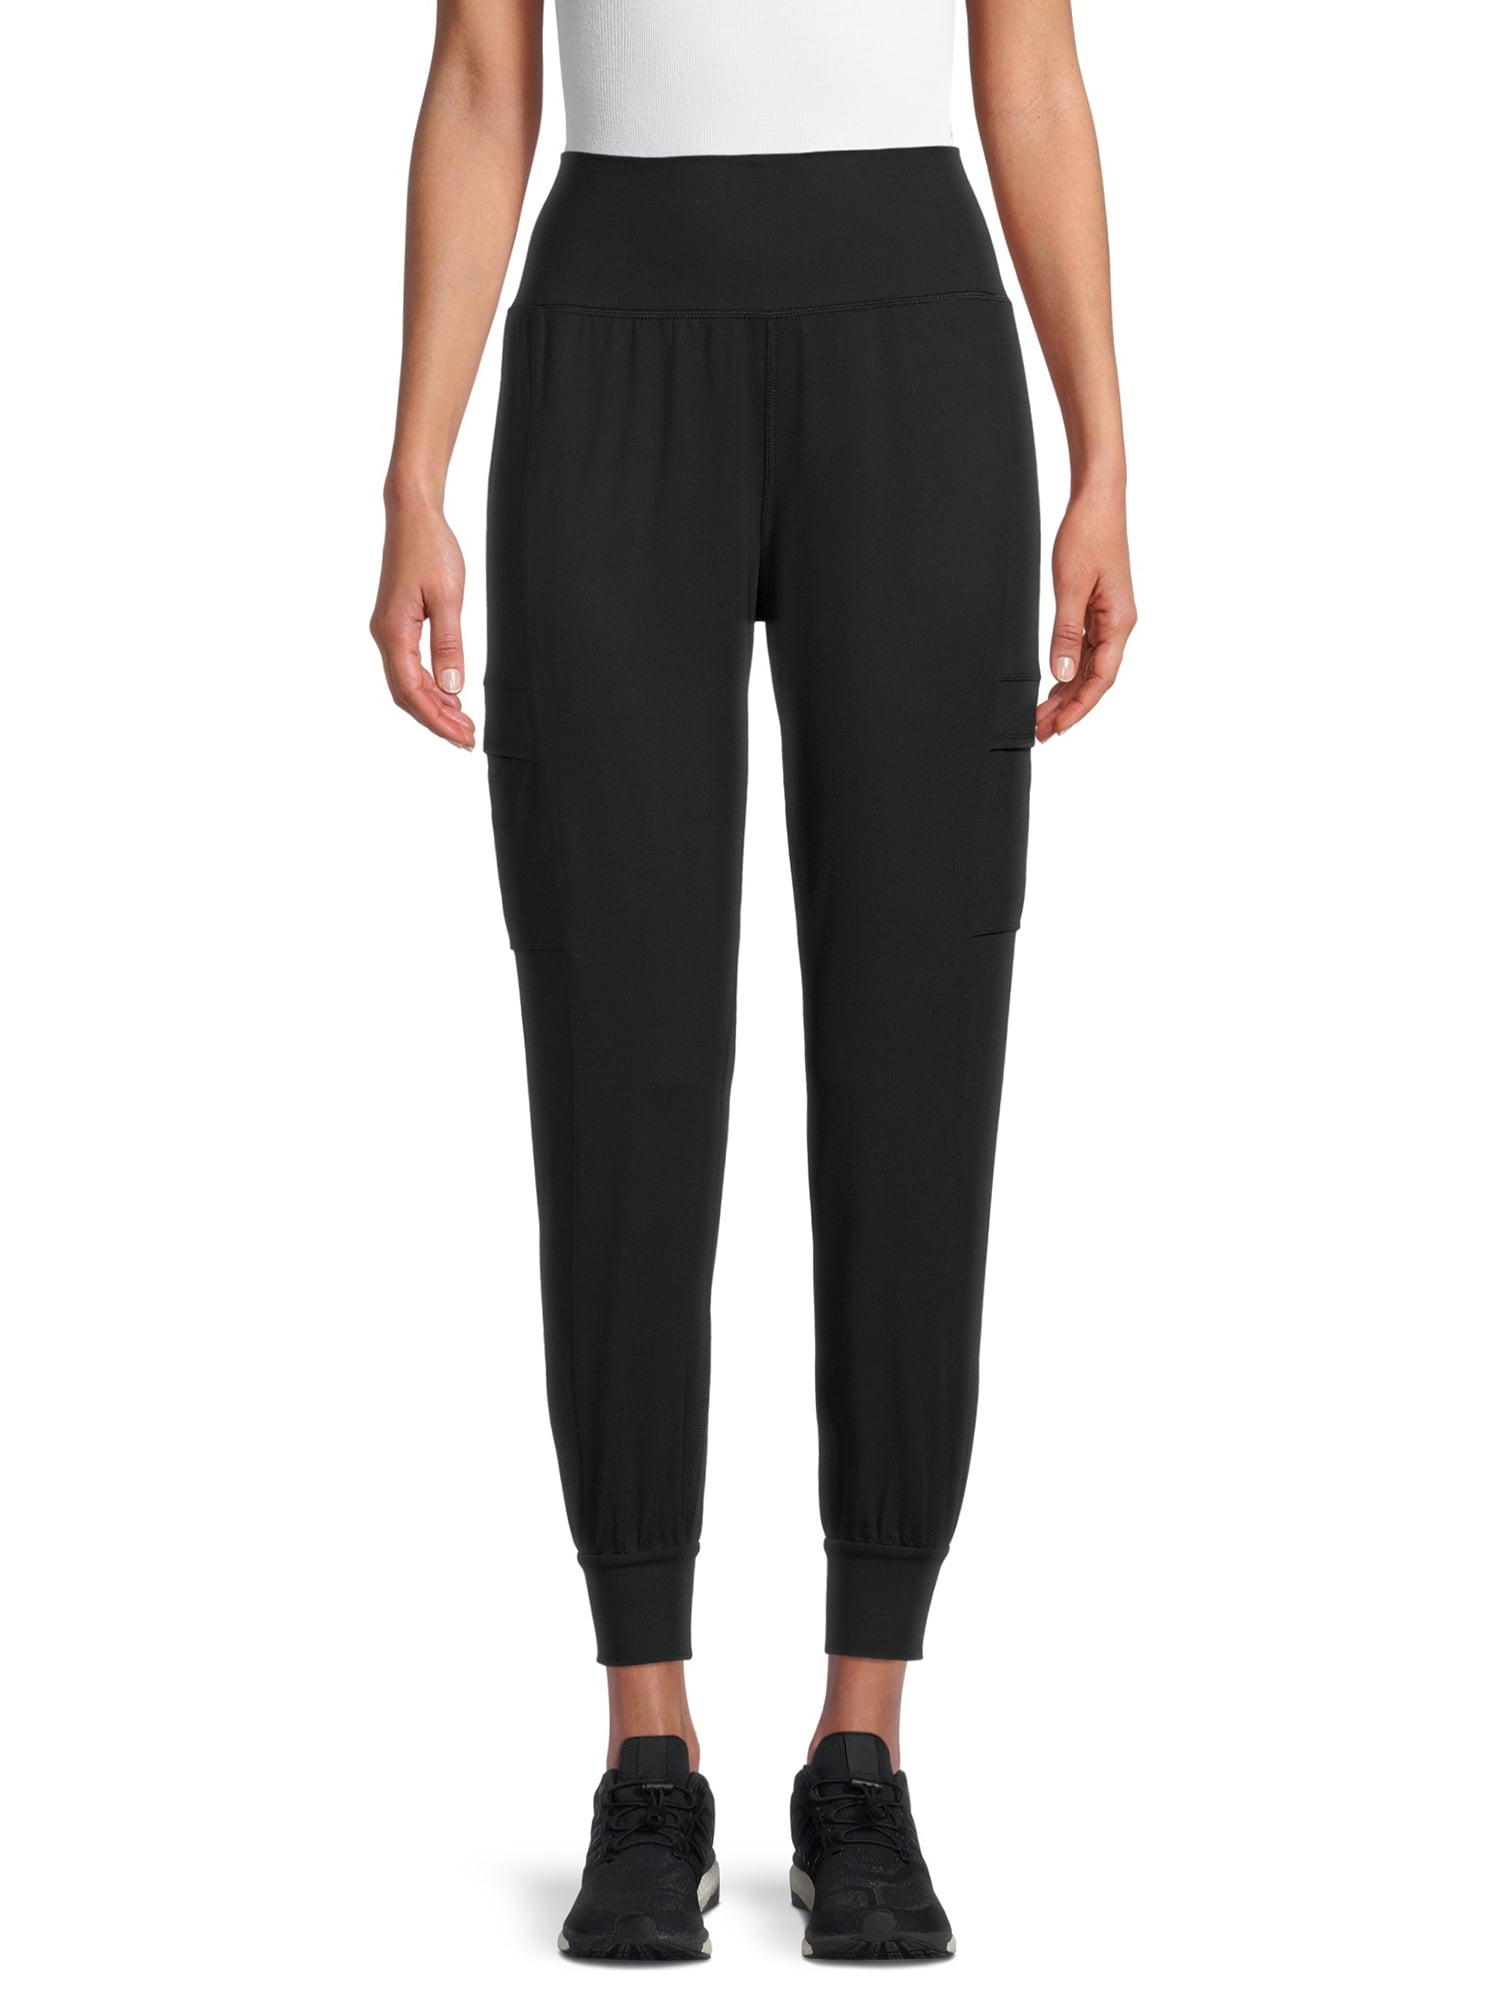 Avia Yoga Pants Women's Size XS Black Stretch Pull On Activewear